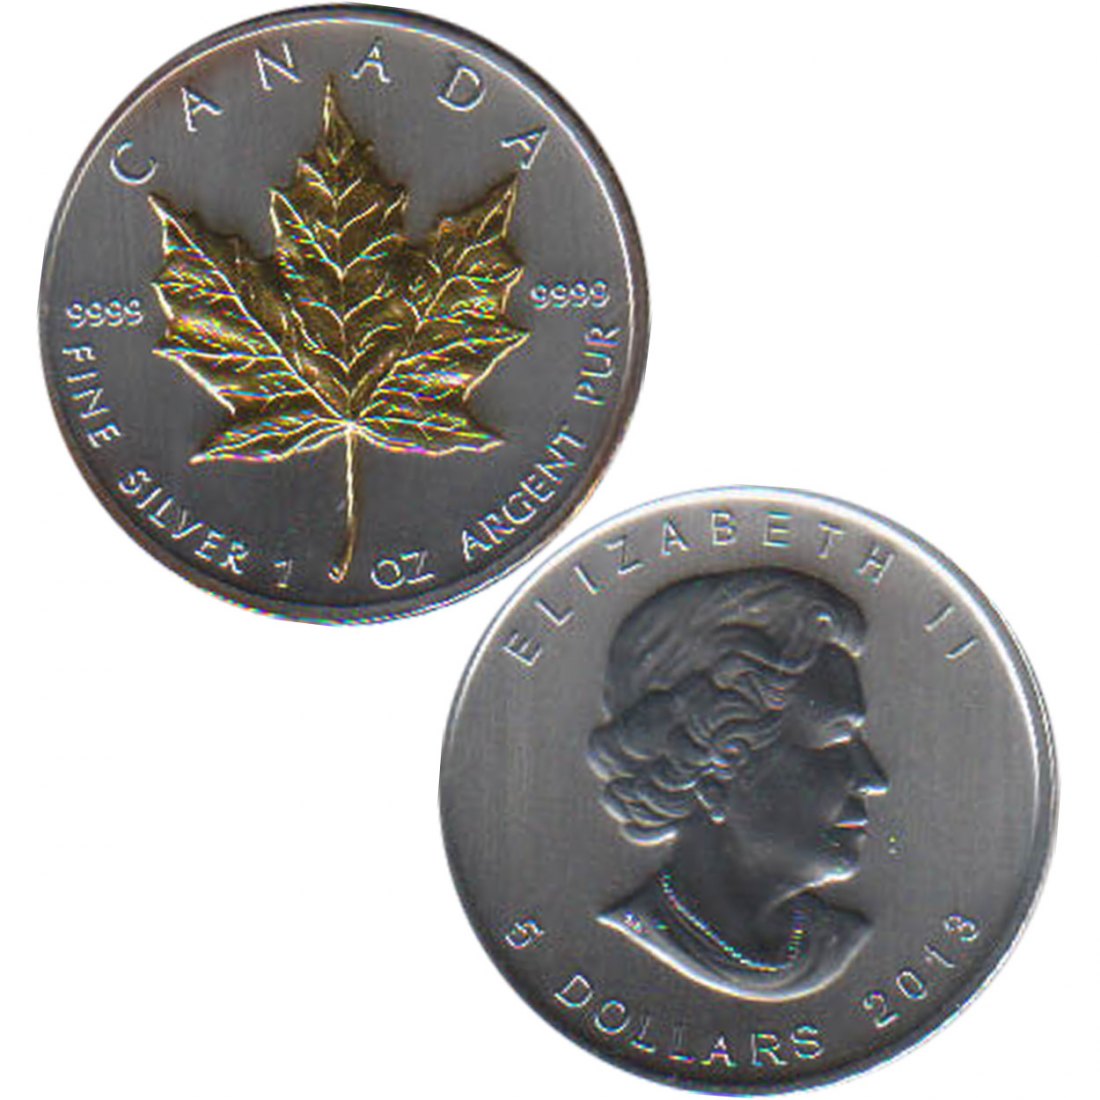  Kanada 5$ Silbermünze *Maple Leaf* 2013 mit 24 Karat Godapplikation 1oz Silber 5.000St!   